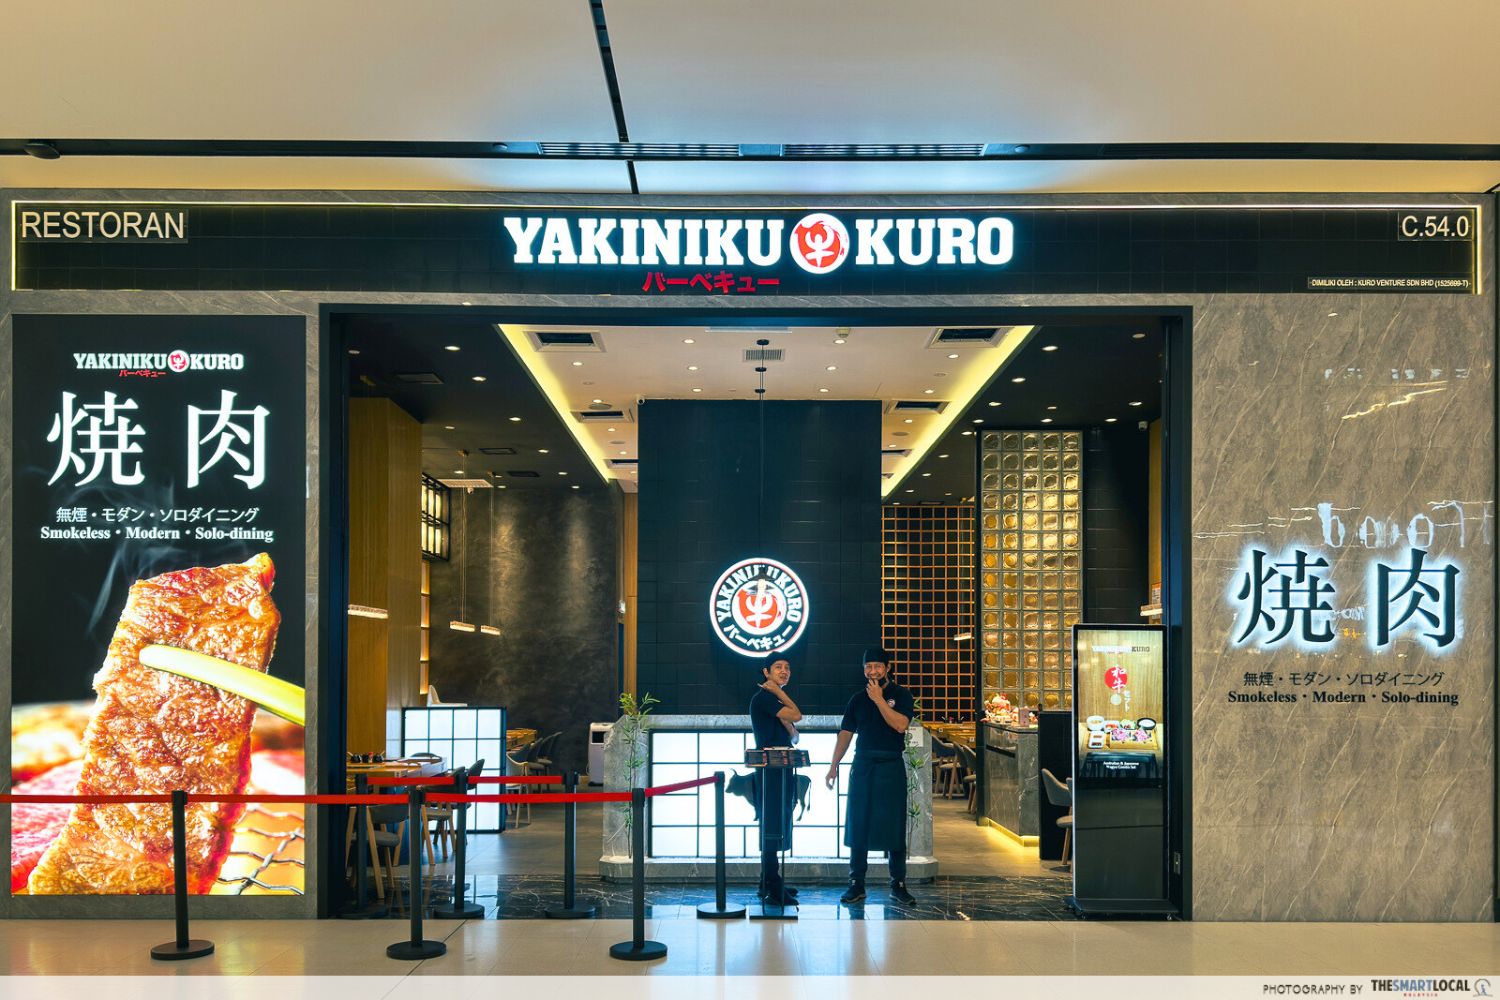 the shopfront of Yakiniku Kuro with two staff standing at the entrance